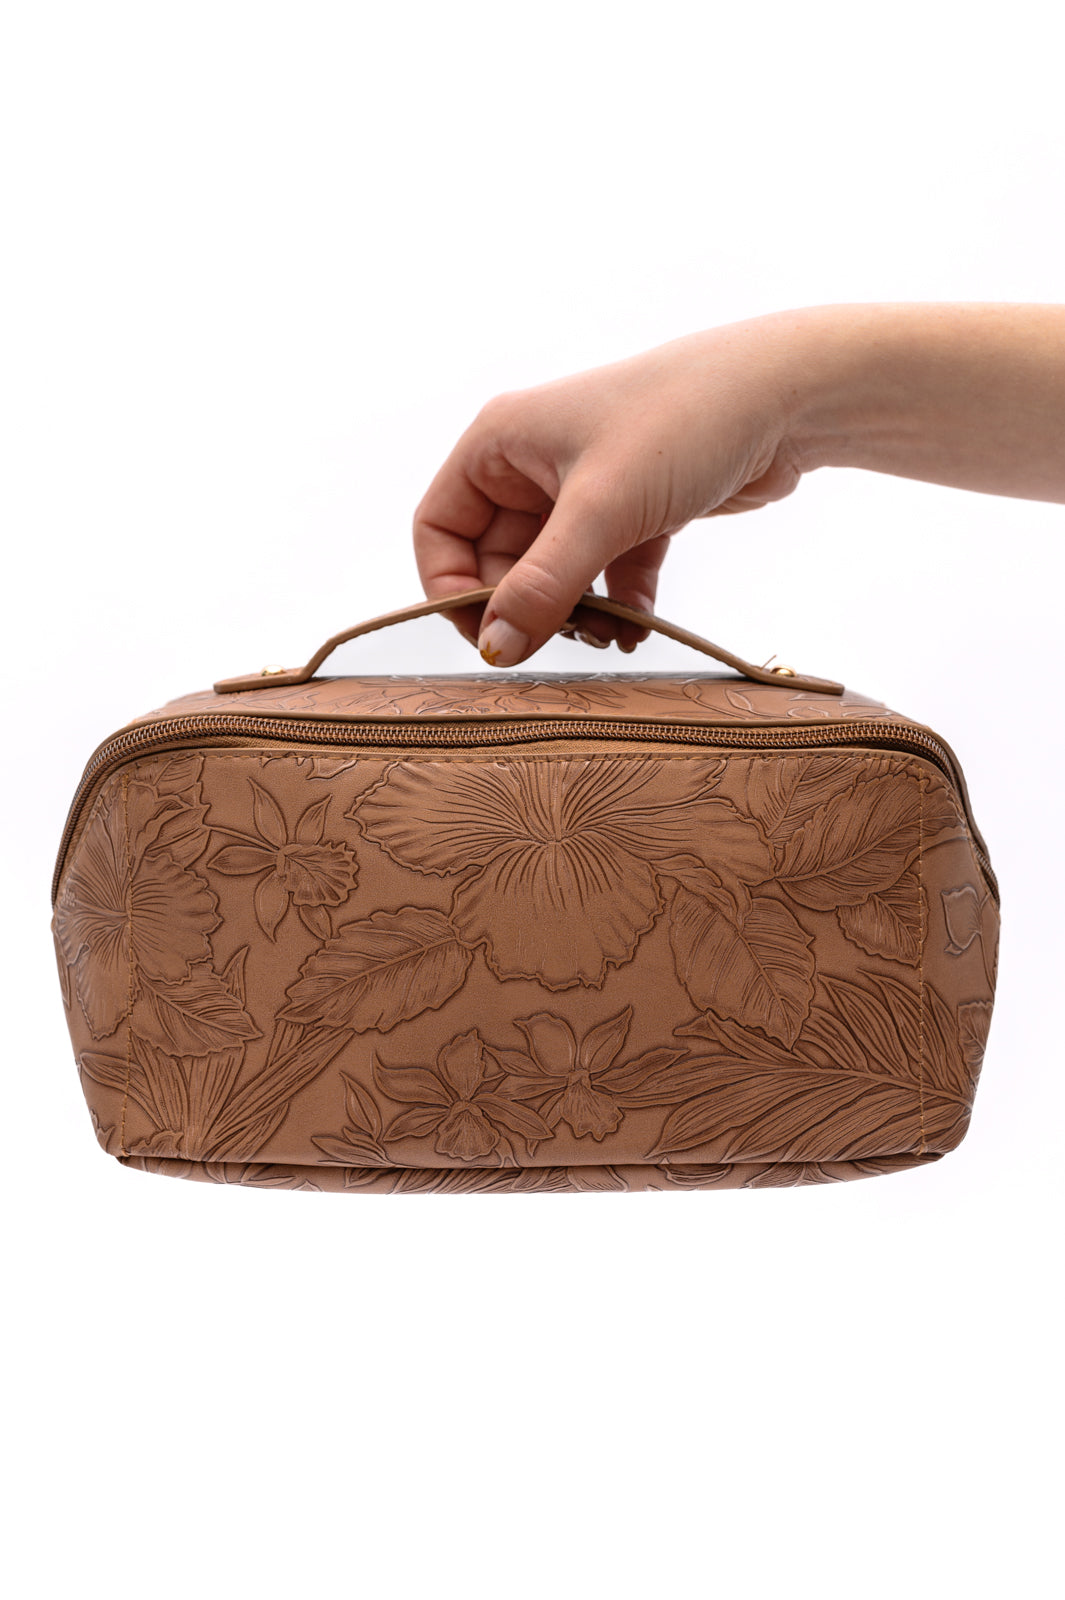 Floral Embossed Large Capacity Cosmetic Bag in Tan